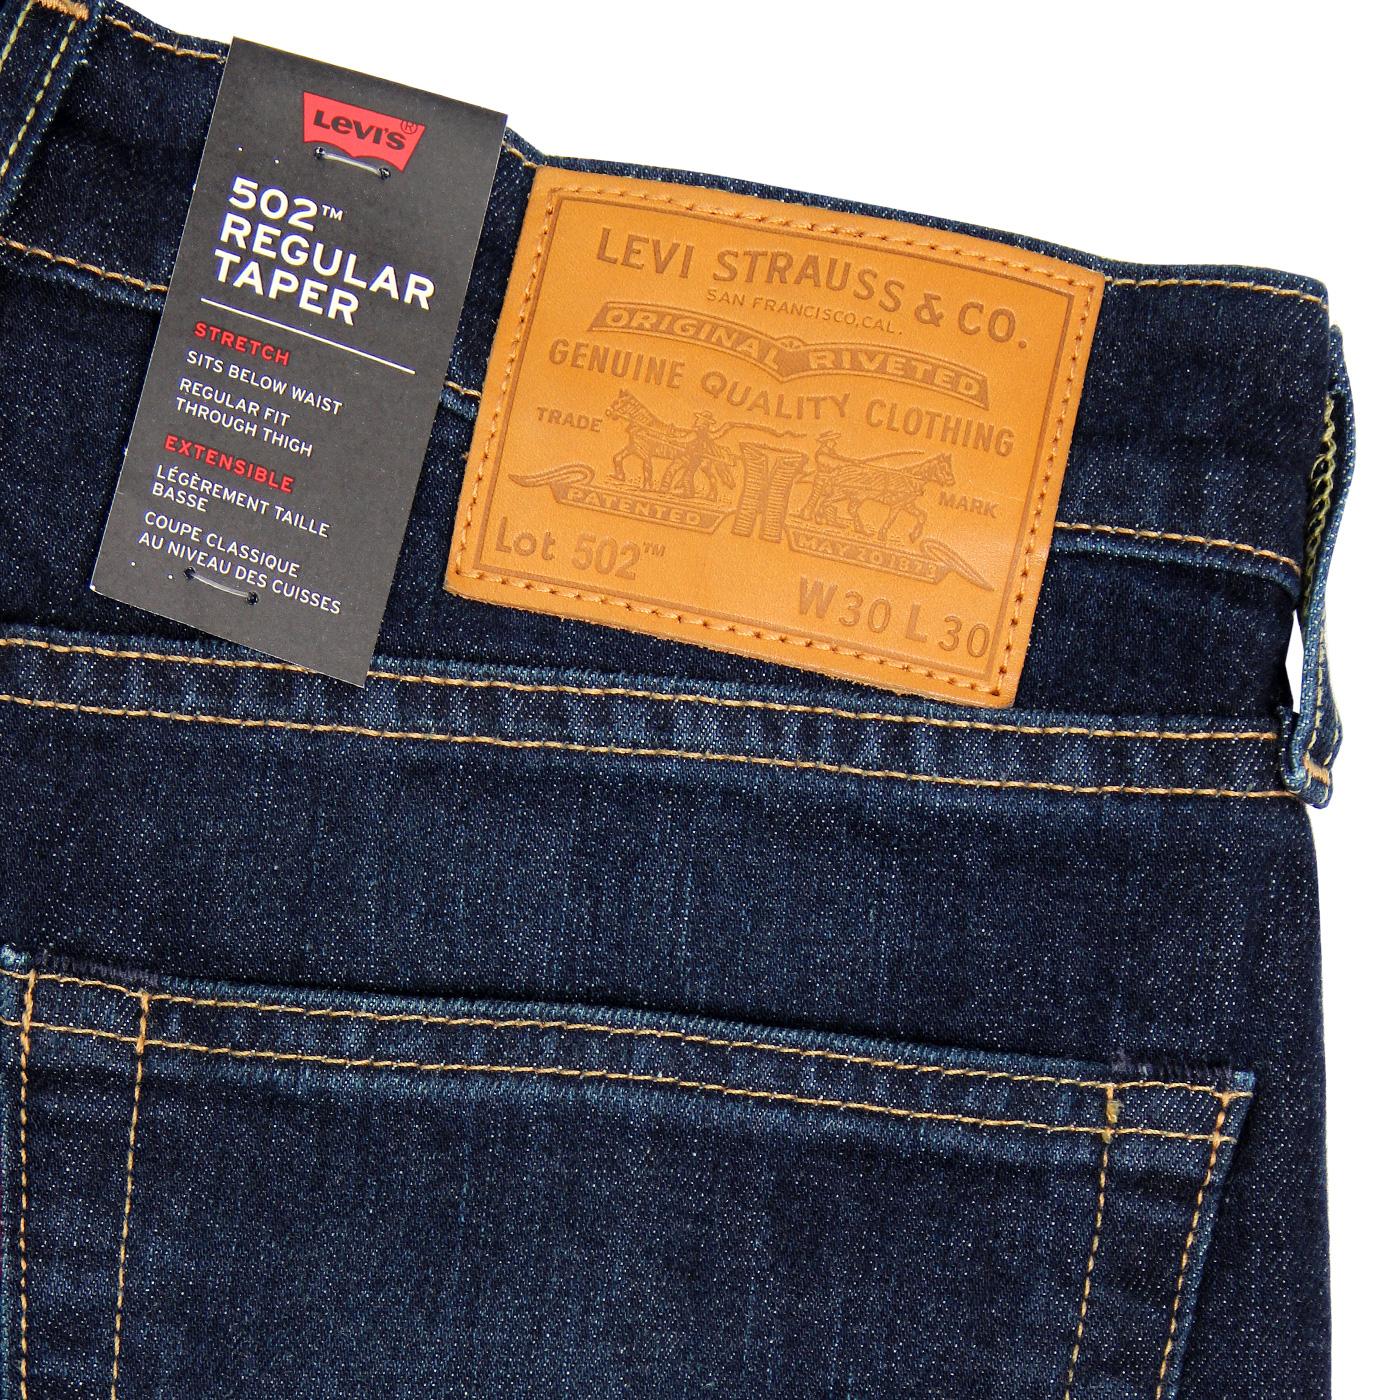 502 Regular Tapered Mod Denim Jeans 